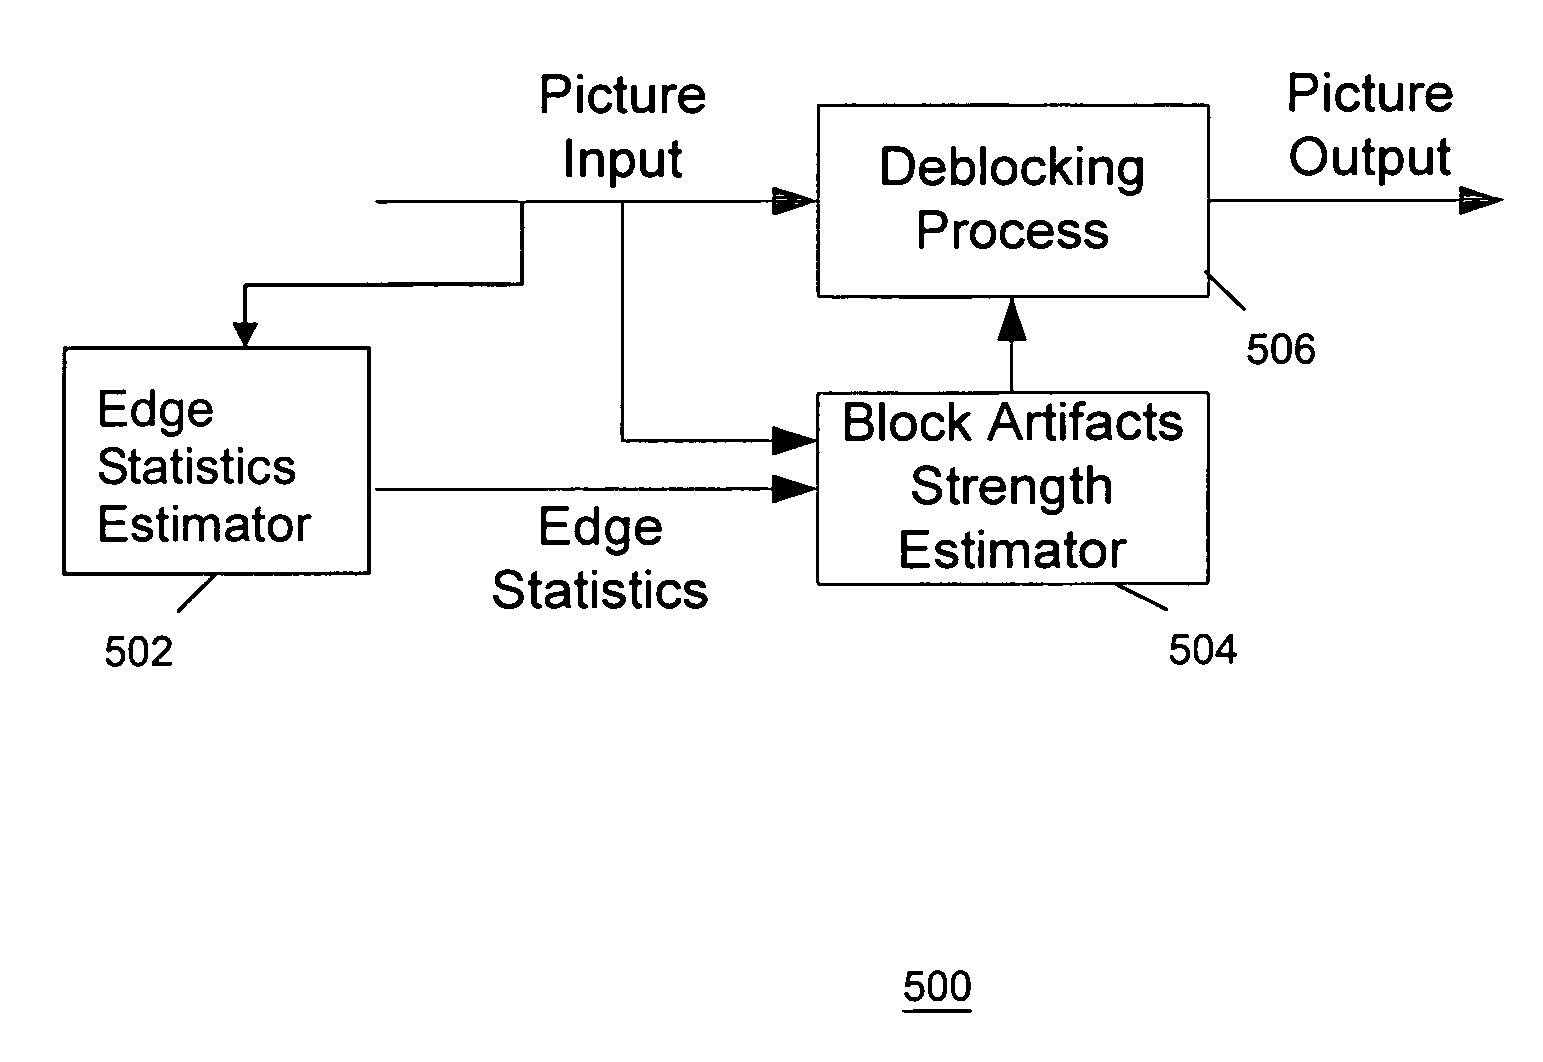 Estimation of block artifact strength based on edge statistics